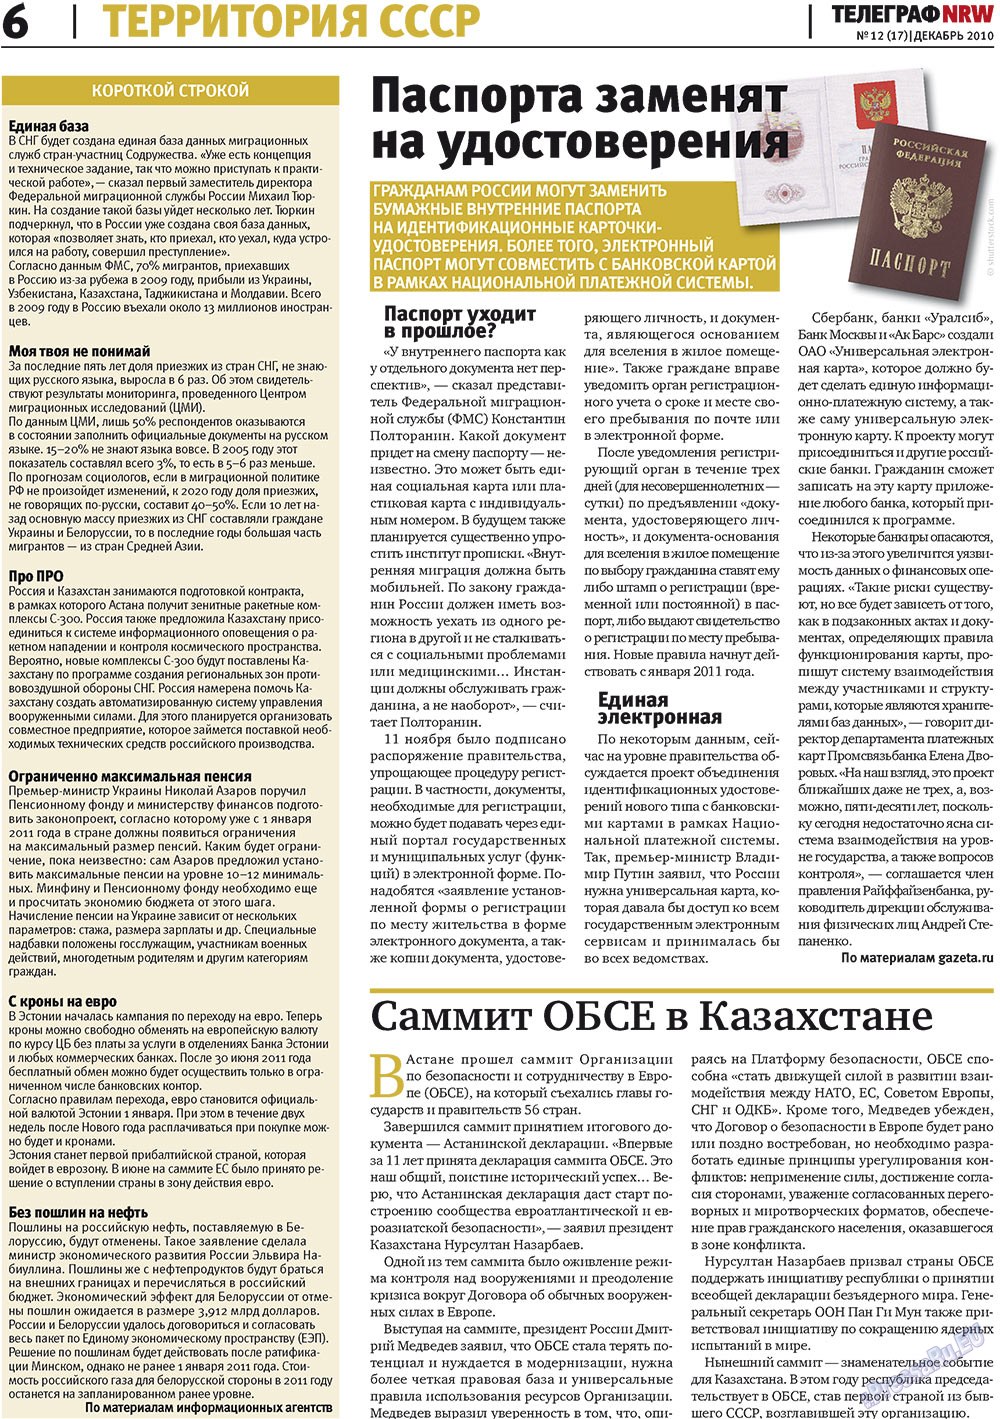 Телеграф NRW, газета. 2010 №12 стр.6